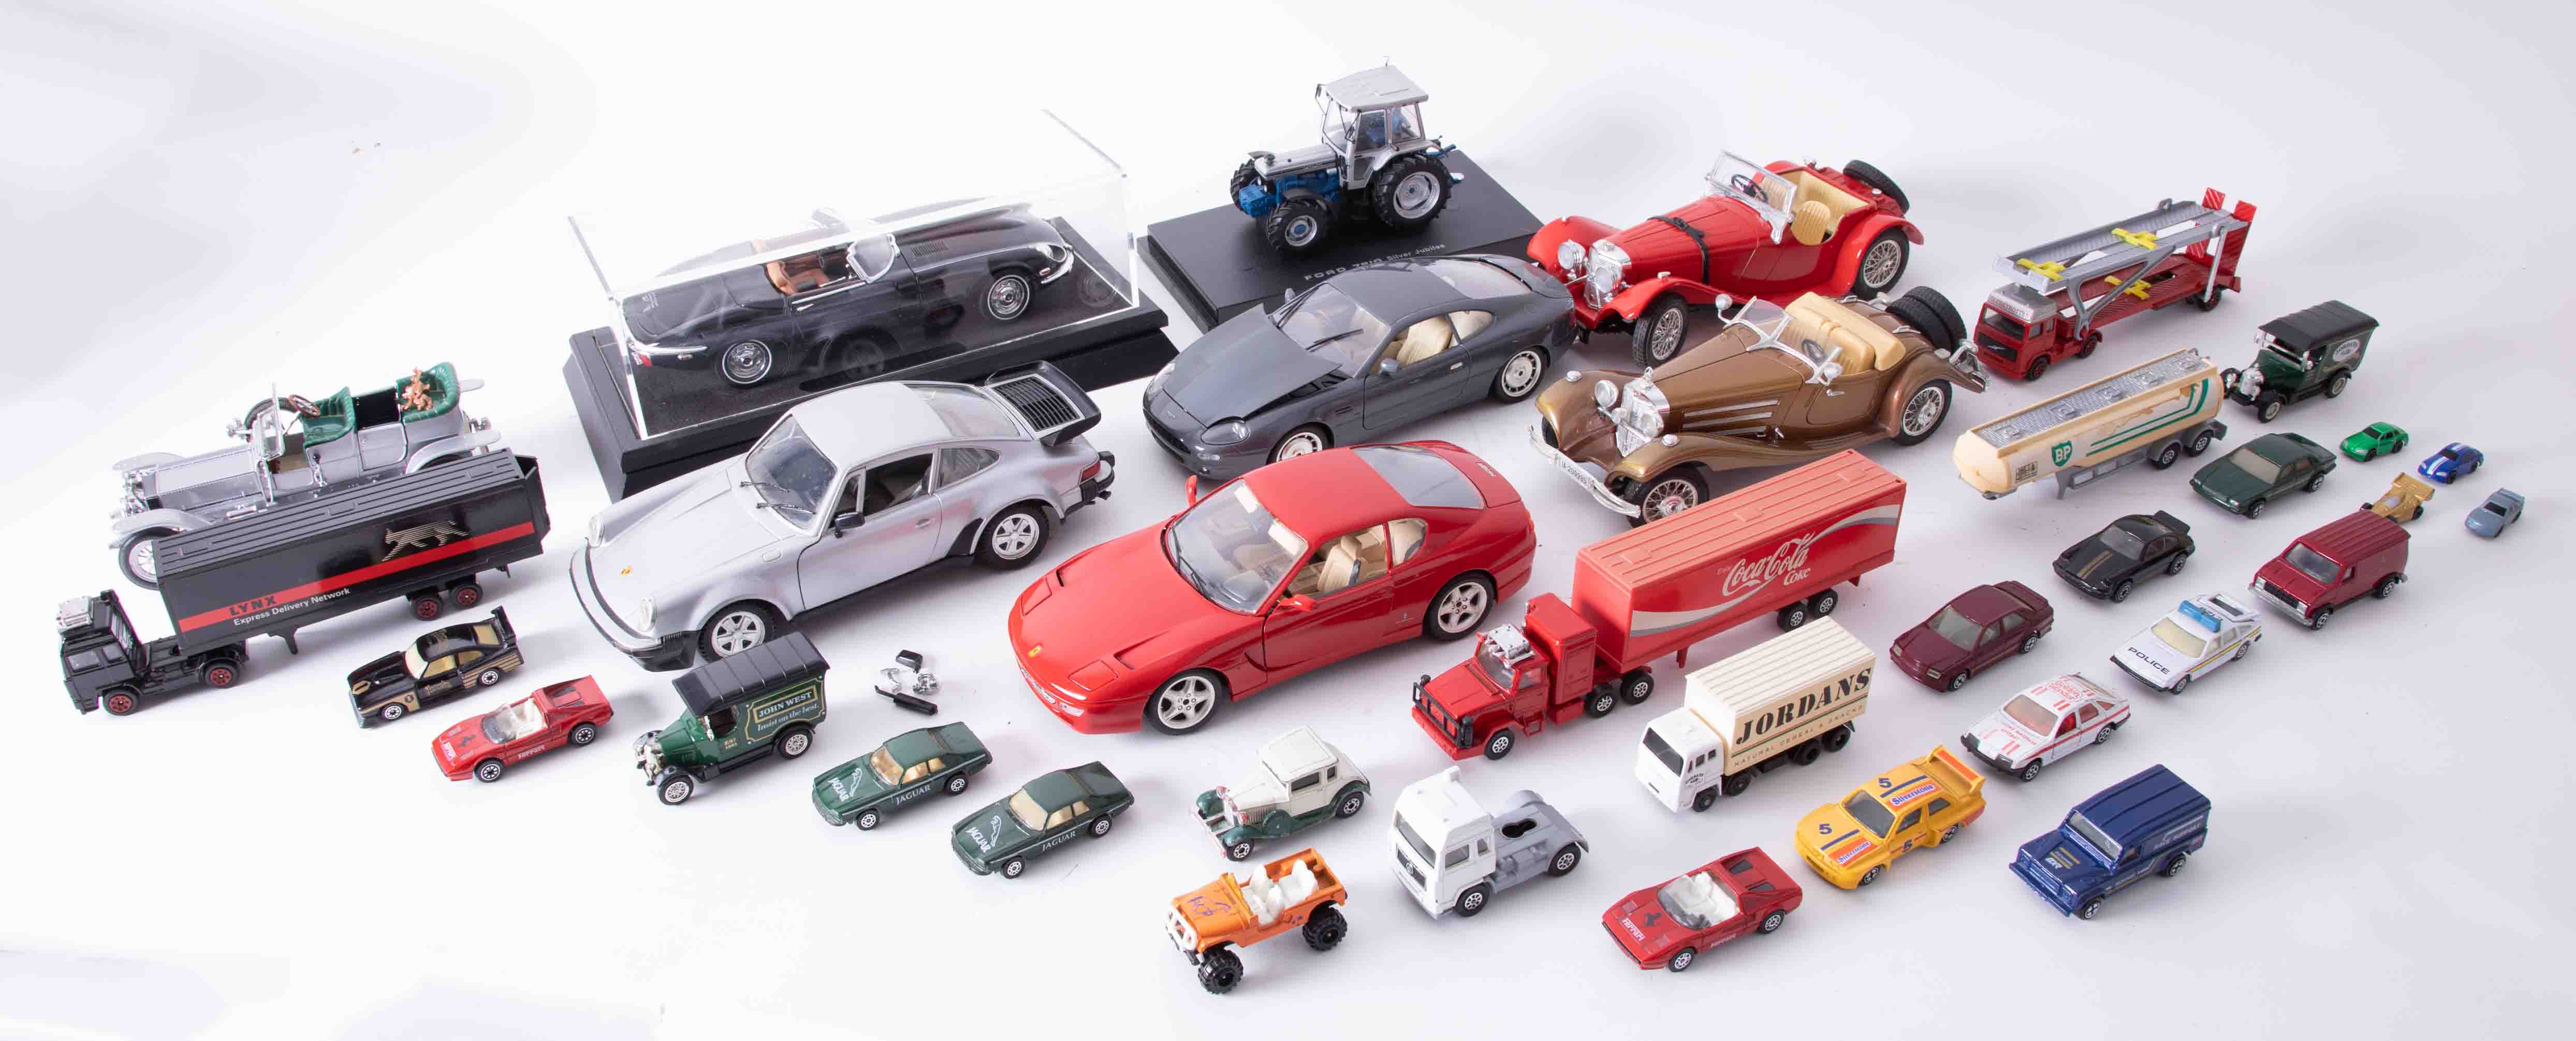 Collection of model cars to include Burago Mercedes Benz, Burago Ferrari also small diecast models